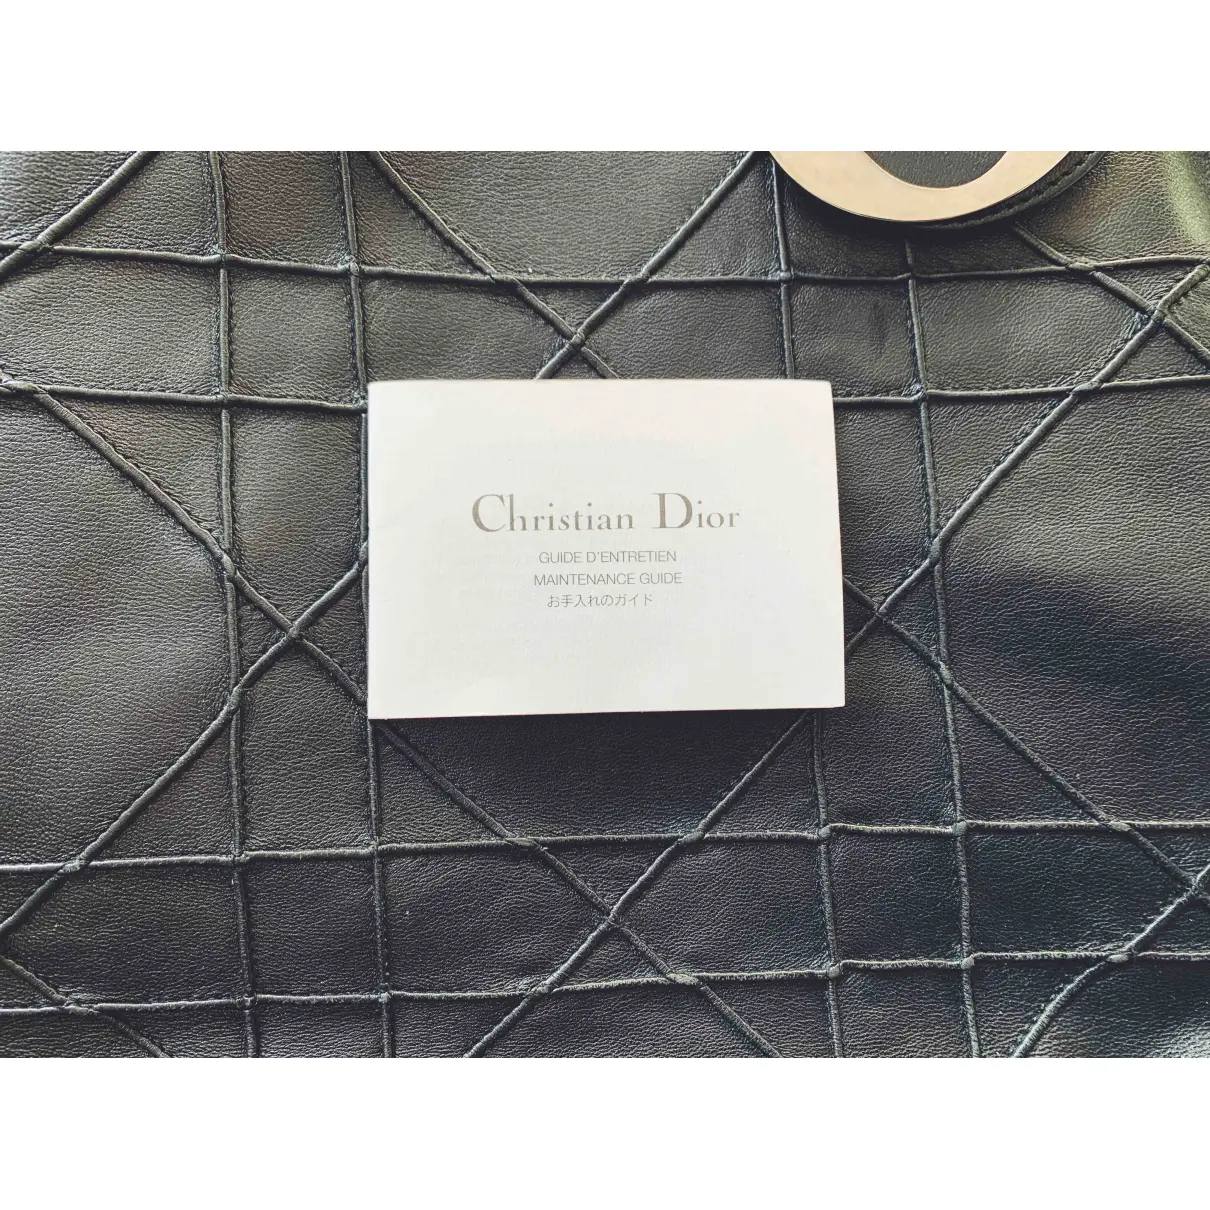 Granville leather crossbody bag Dior